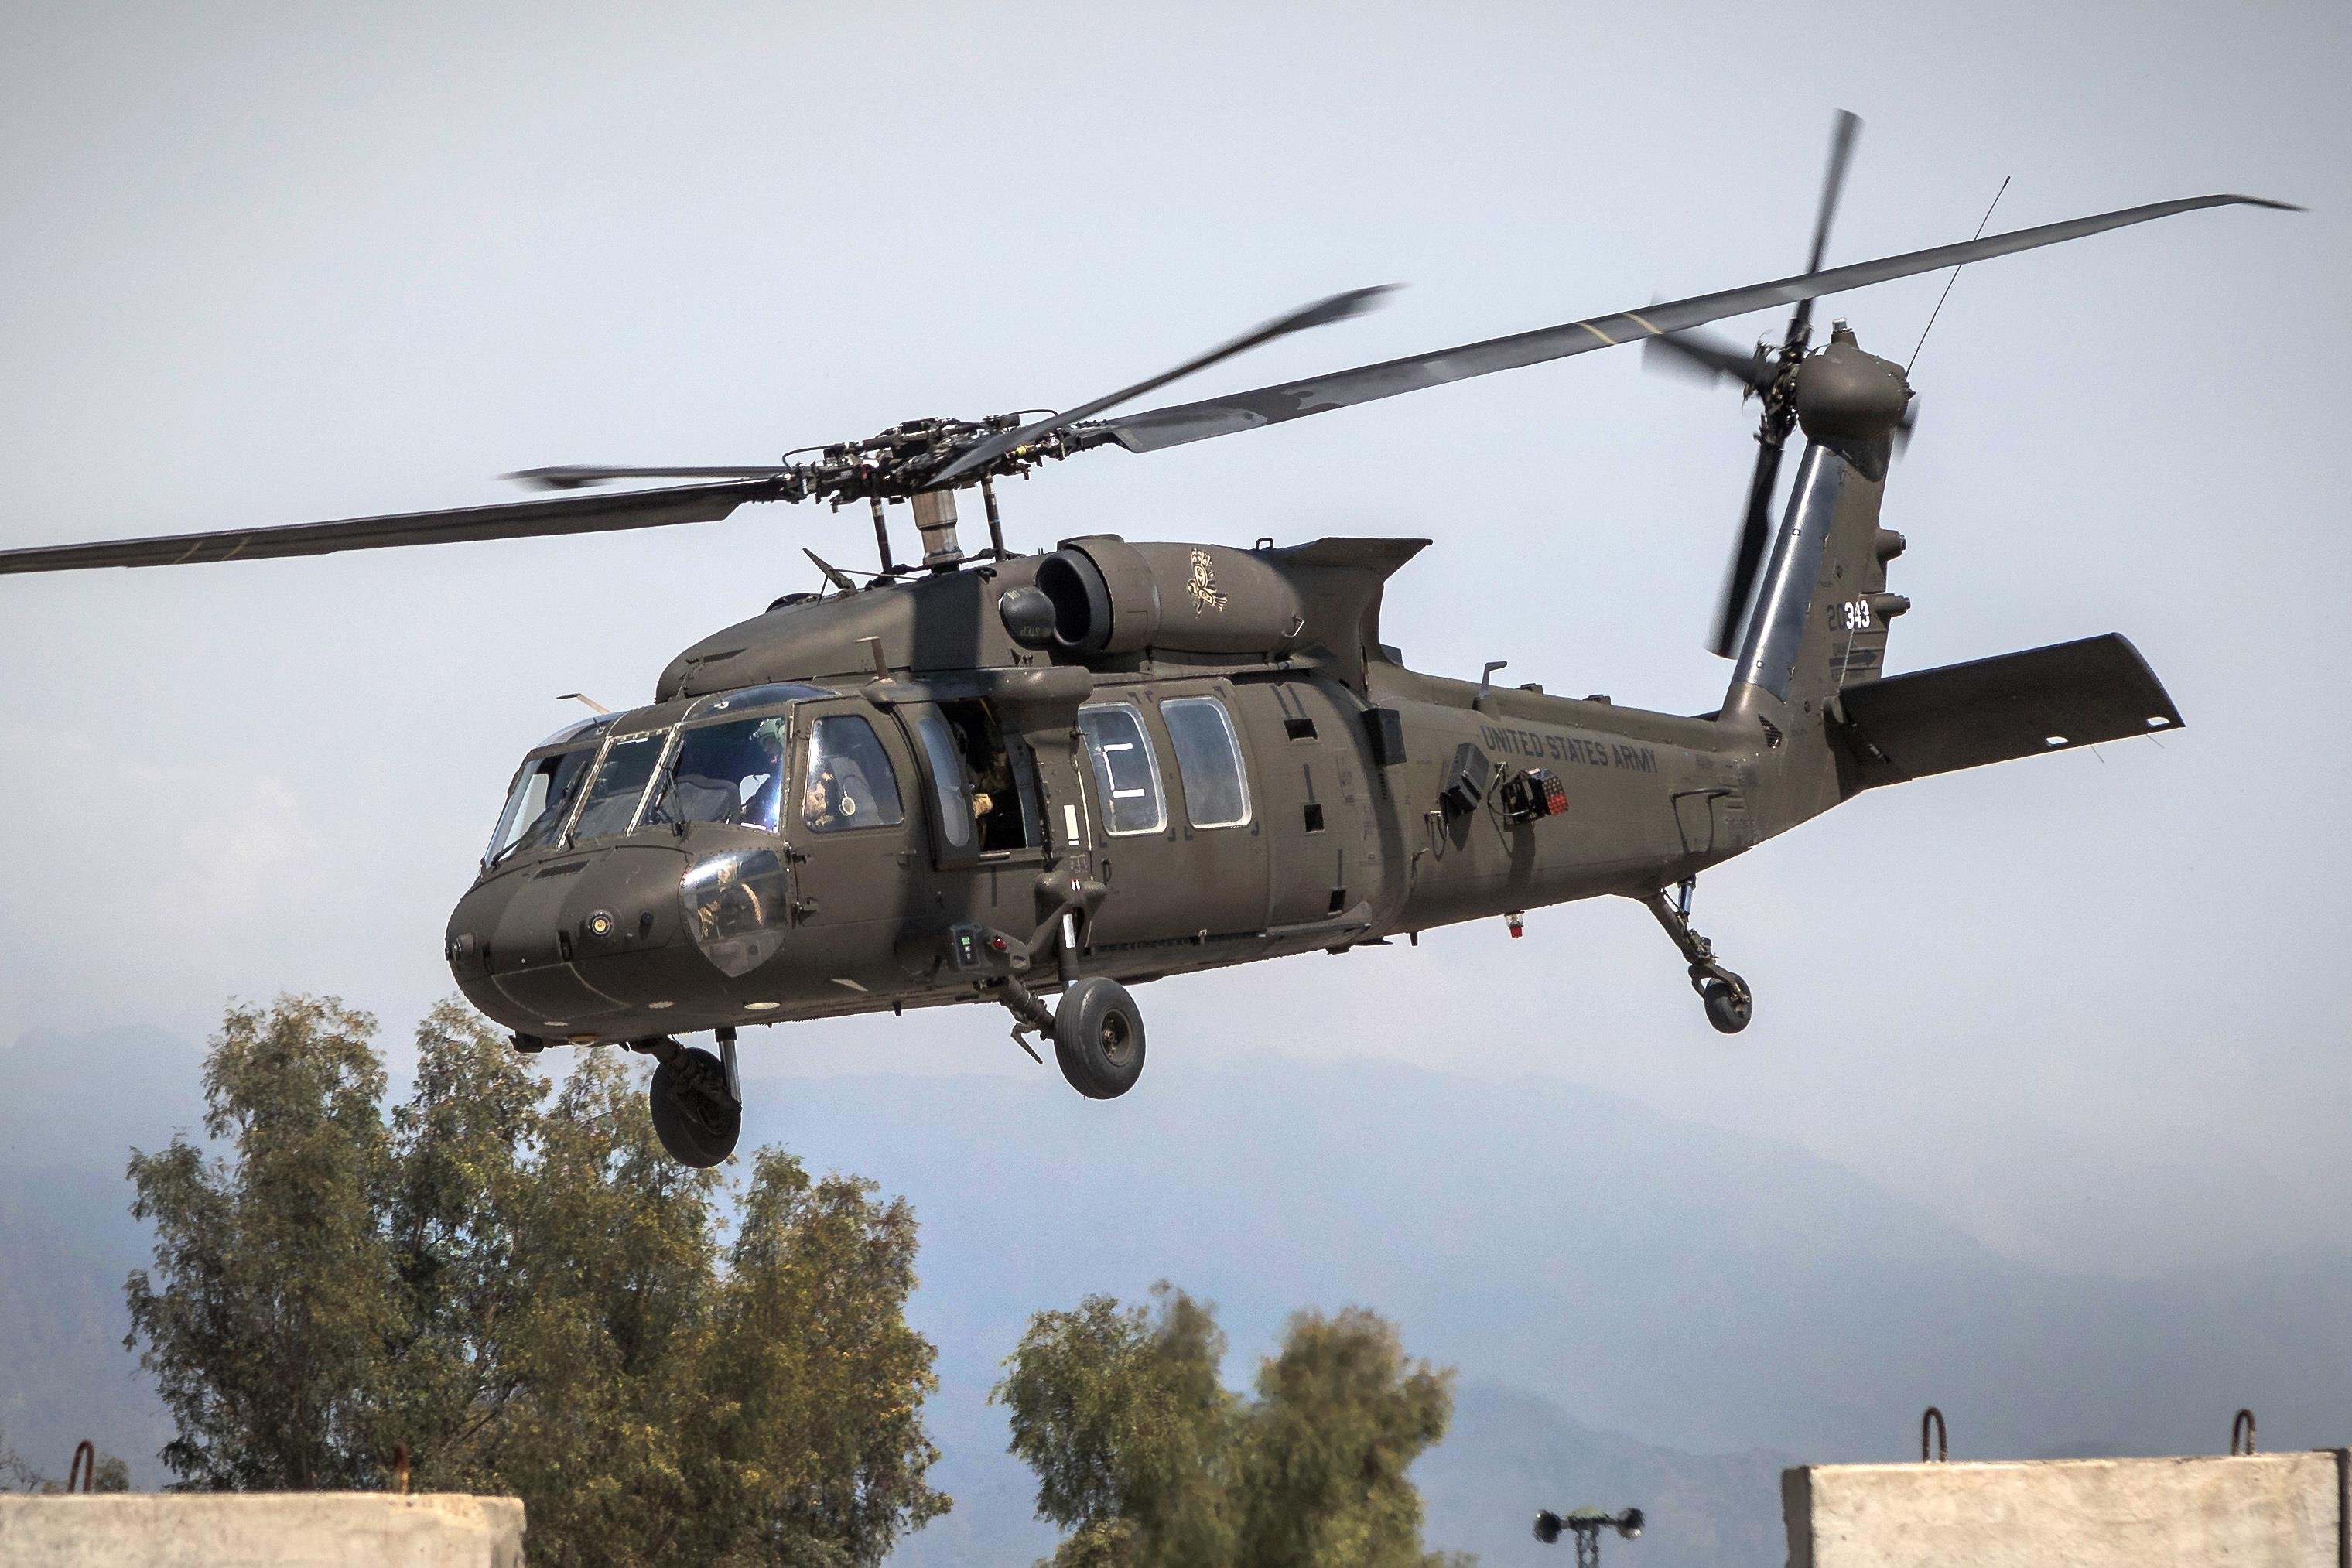 Вертолет uh 60 black hawk. Sikorsky uh-60l Black Hawk. Sikorsky uh-60l Black Hawk (s-70a). Вертолёт uh-60 Black Hawk. Вертолет Блэк Хоук.